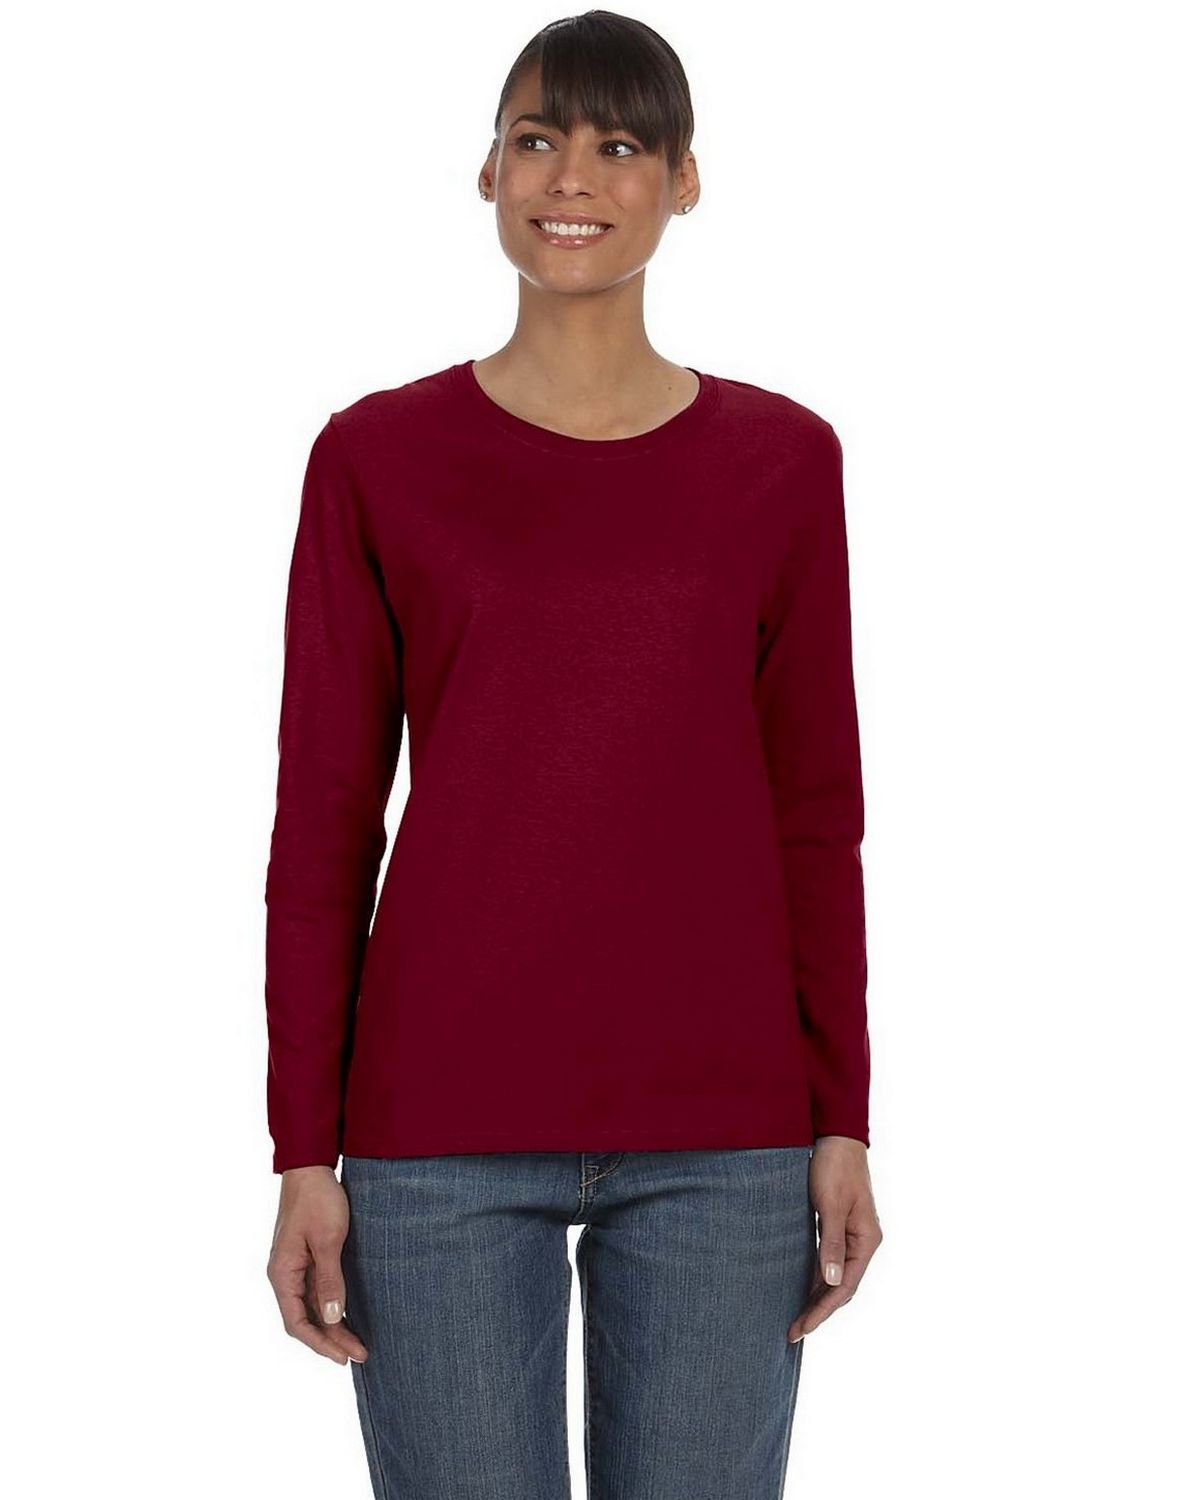 Buy Gildan 5400L Missy Fit Heavy Cotton Fit Long Sleeve T Shirt